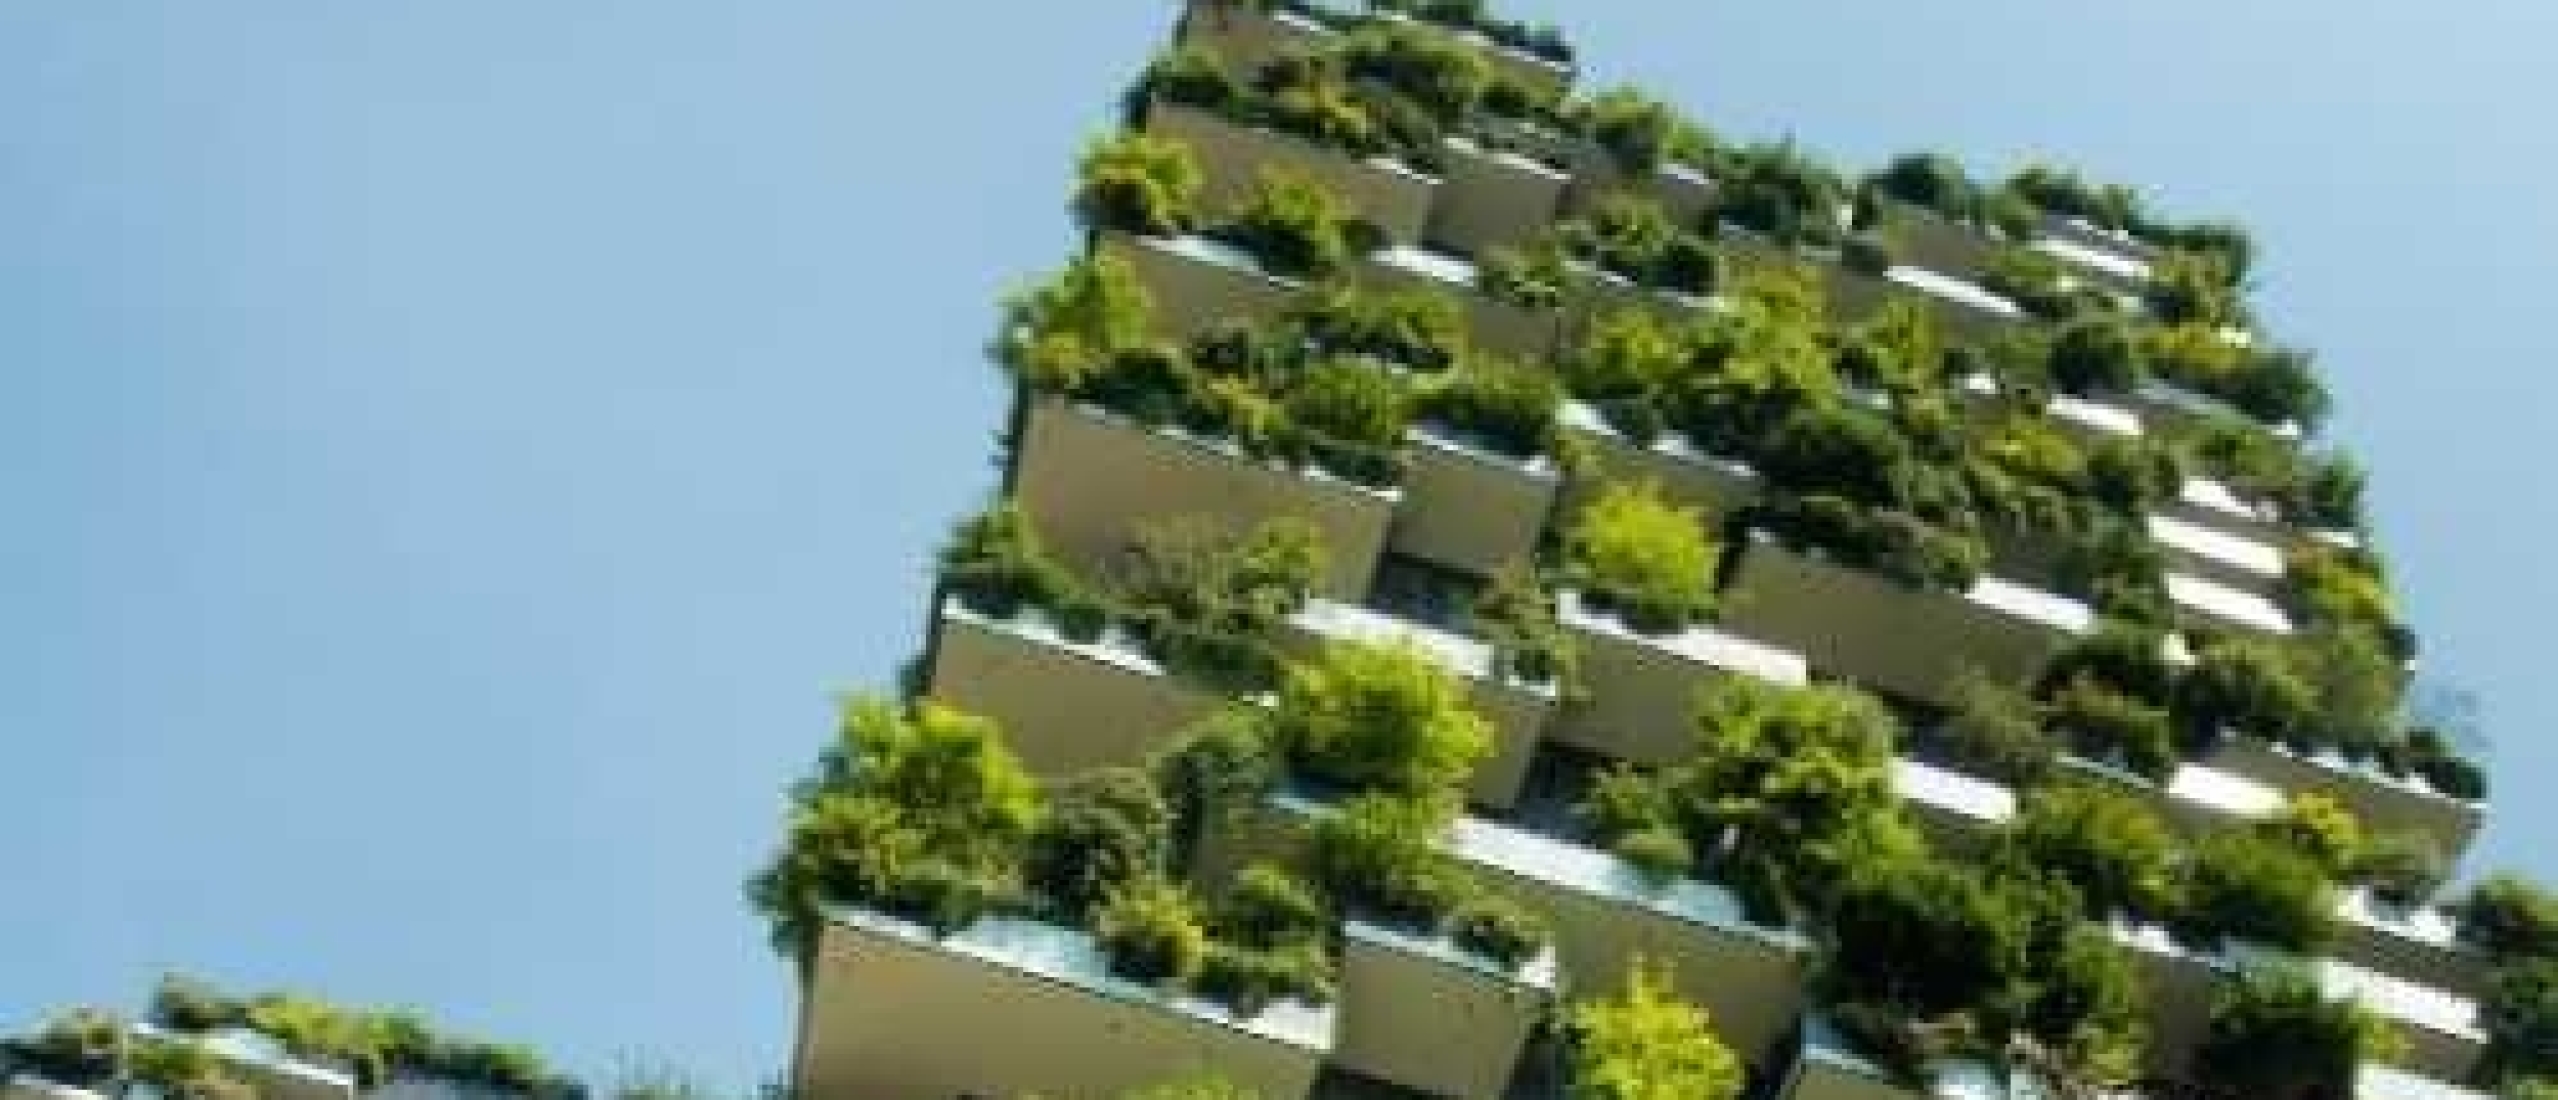 Wat is duurzaam bouwen?